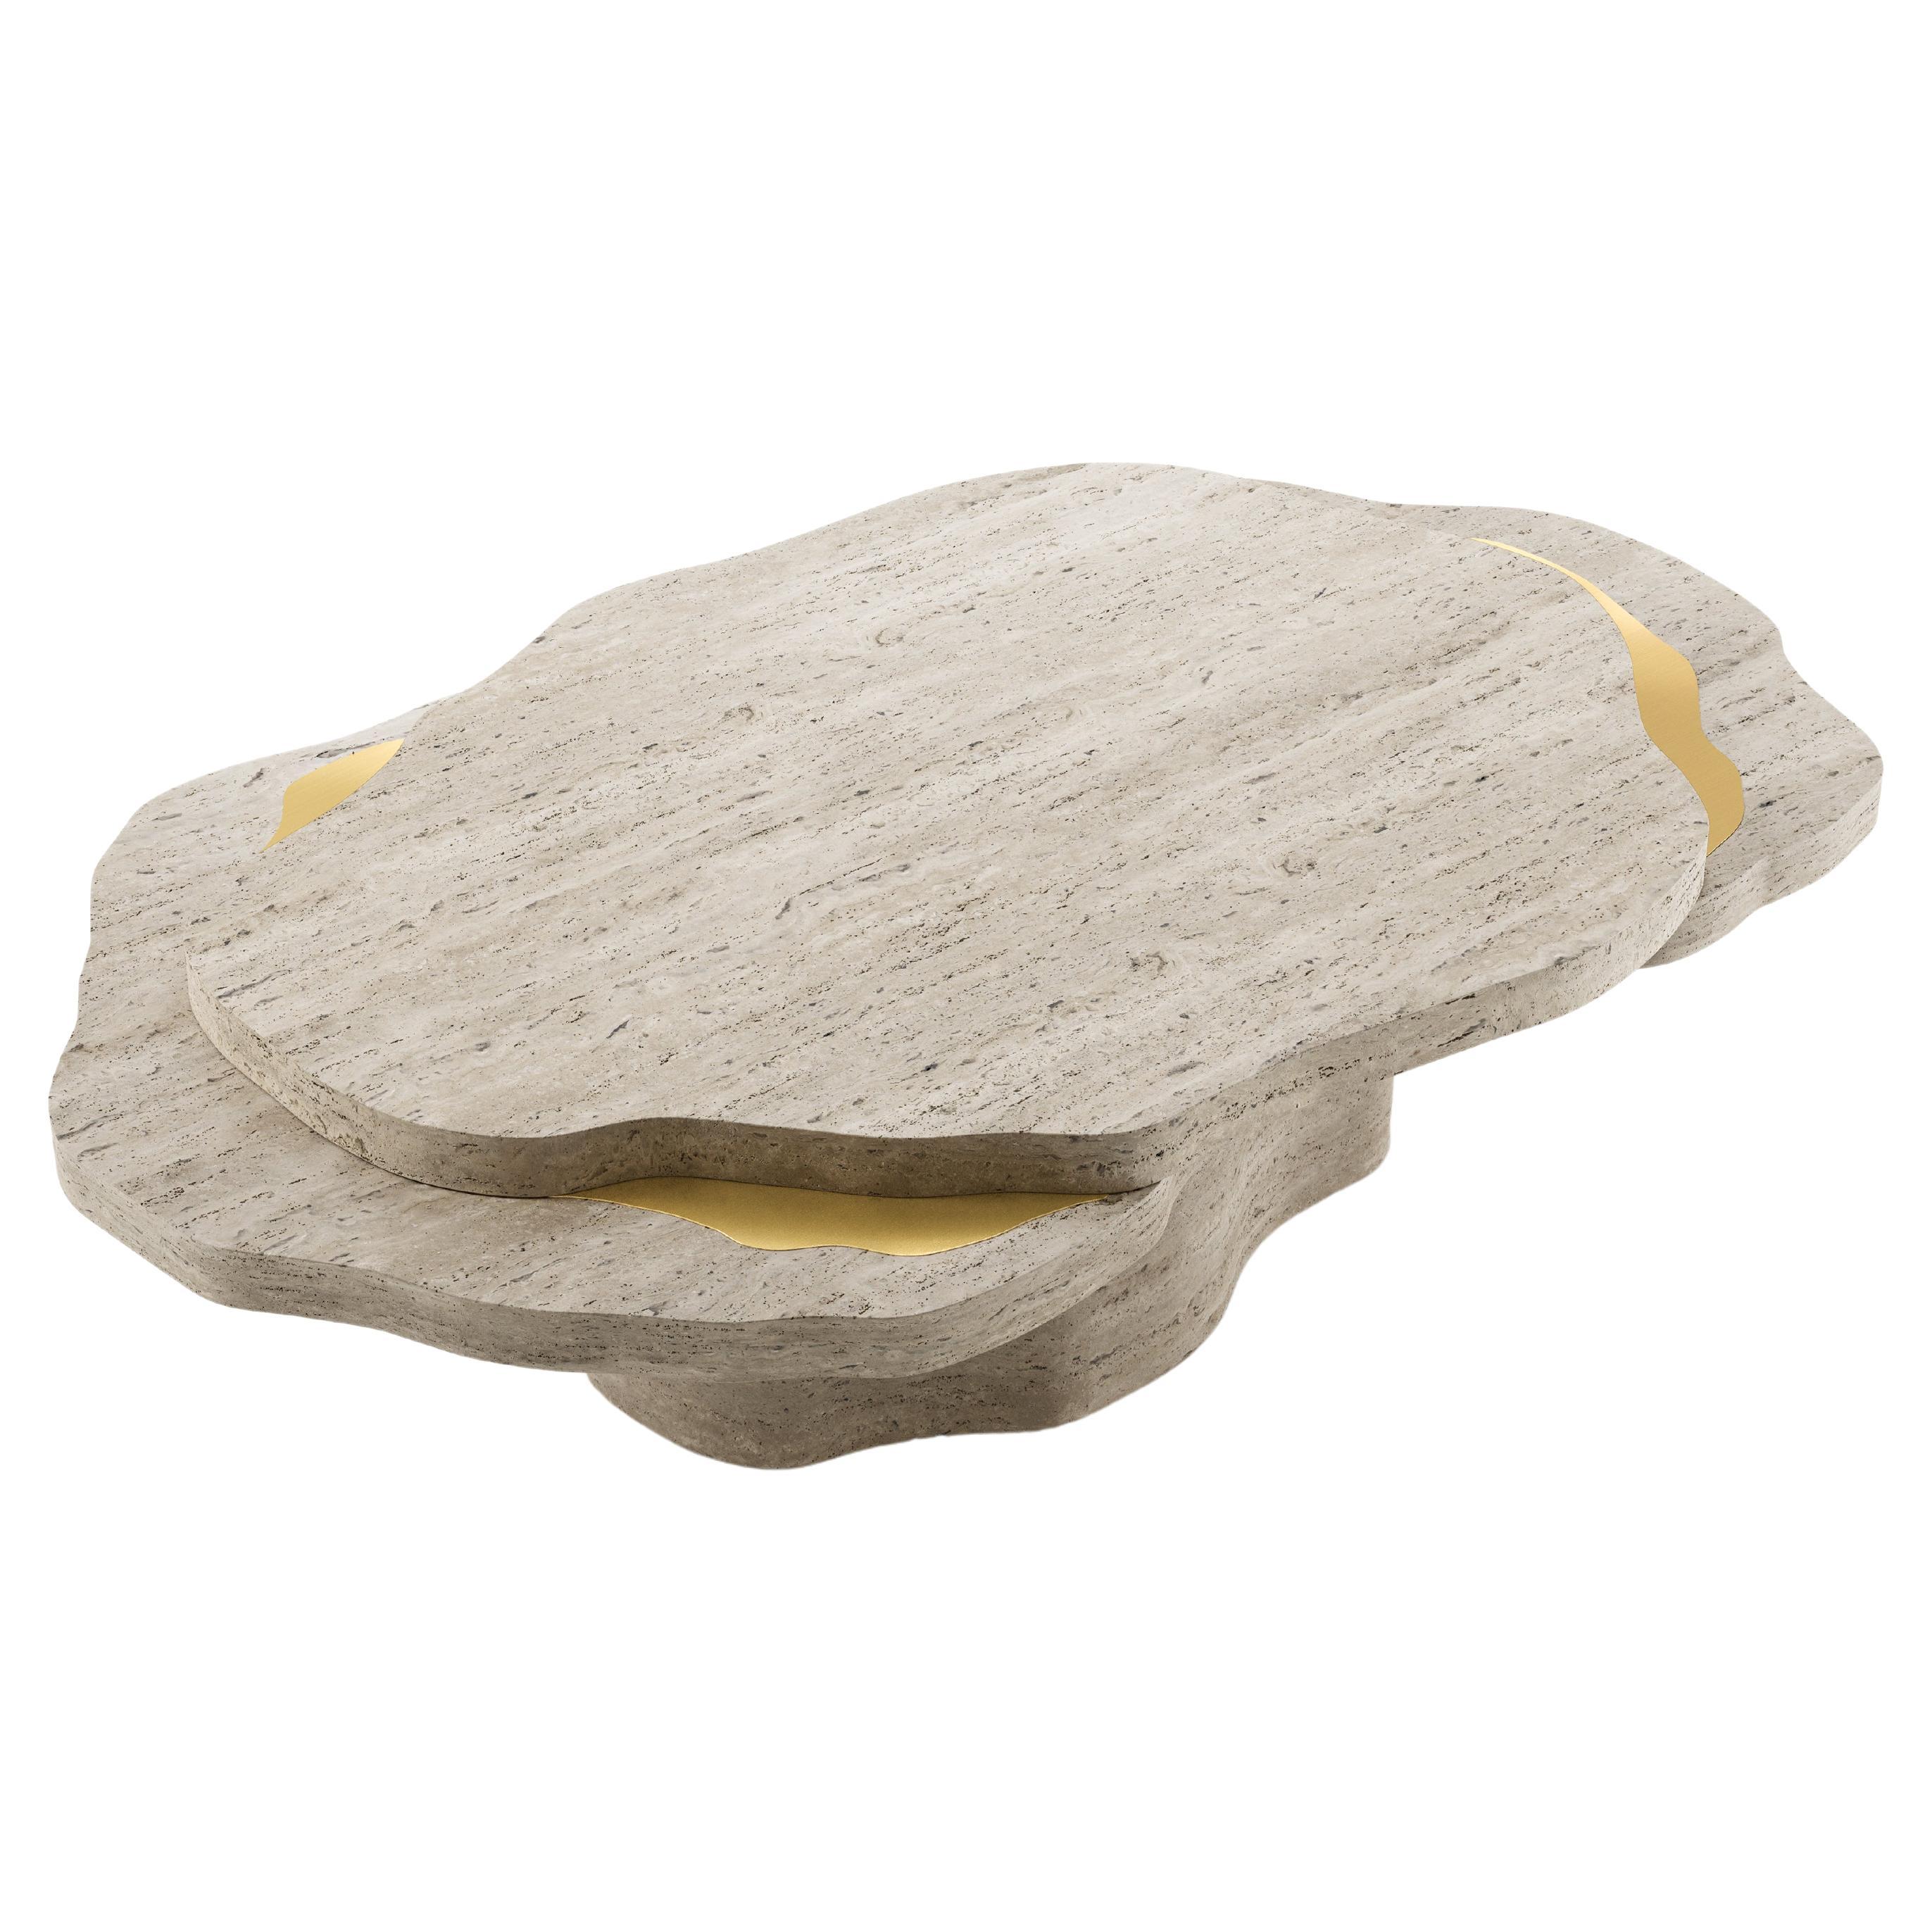 Table basse Arizona, pierre de travertin, InsidherLand de Joana Santos Barbosa